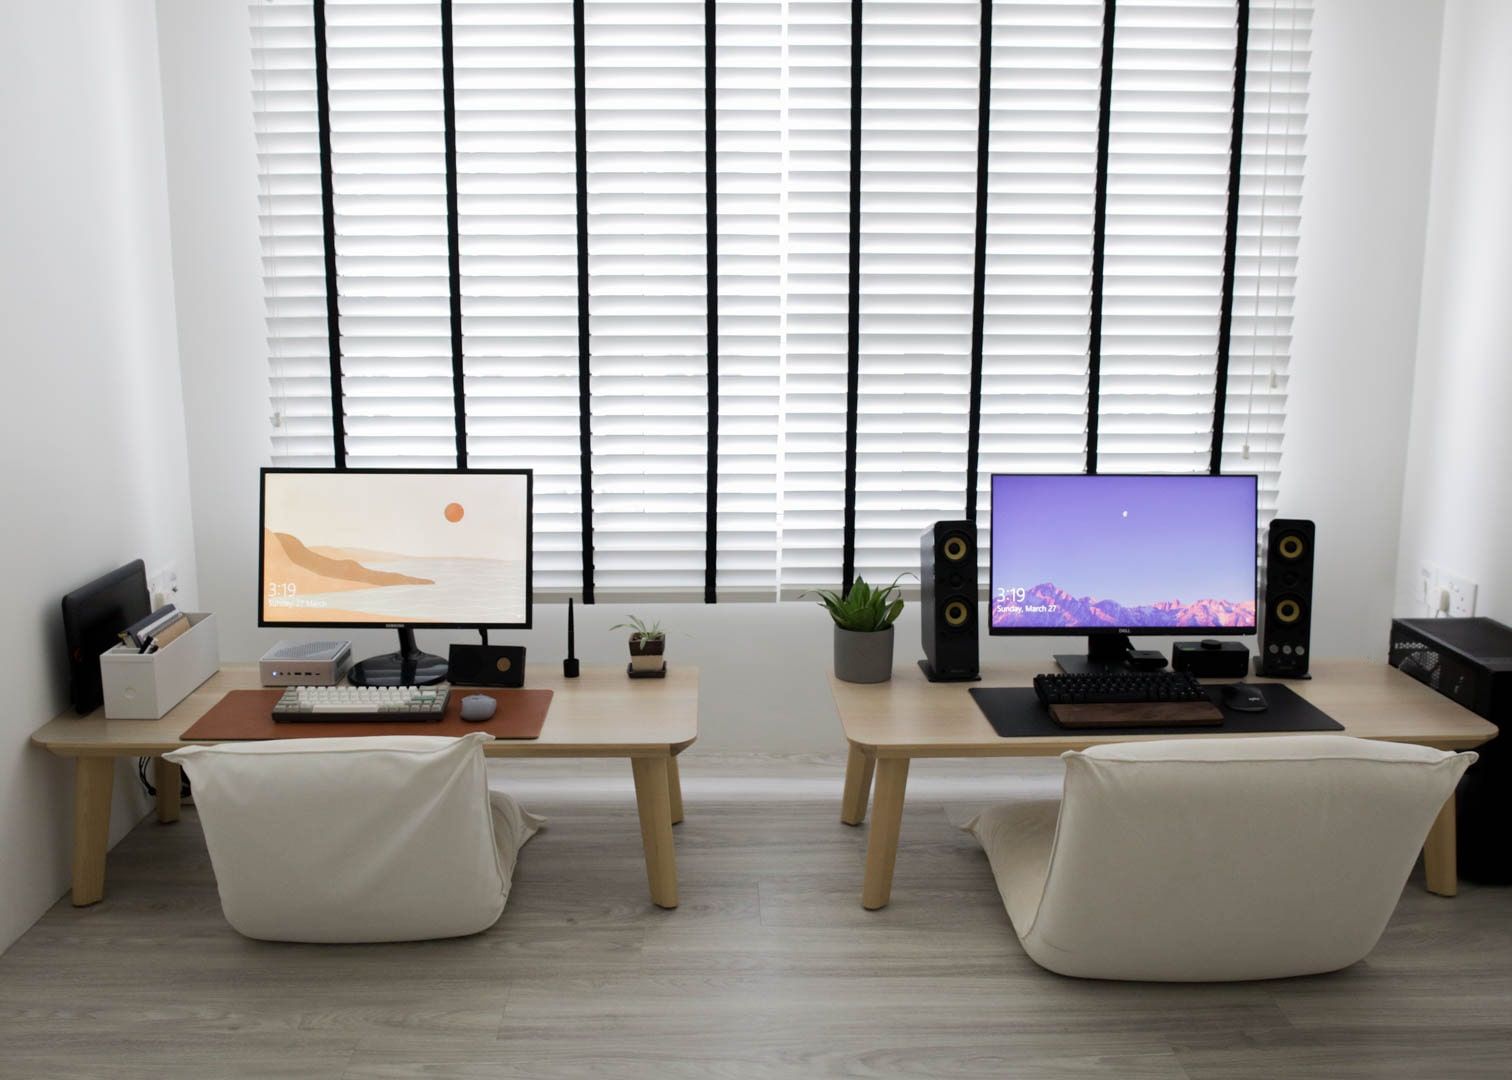 30 Best Study Desk Setup Ideas You Should Check